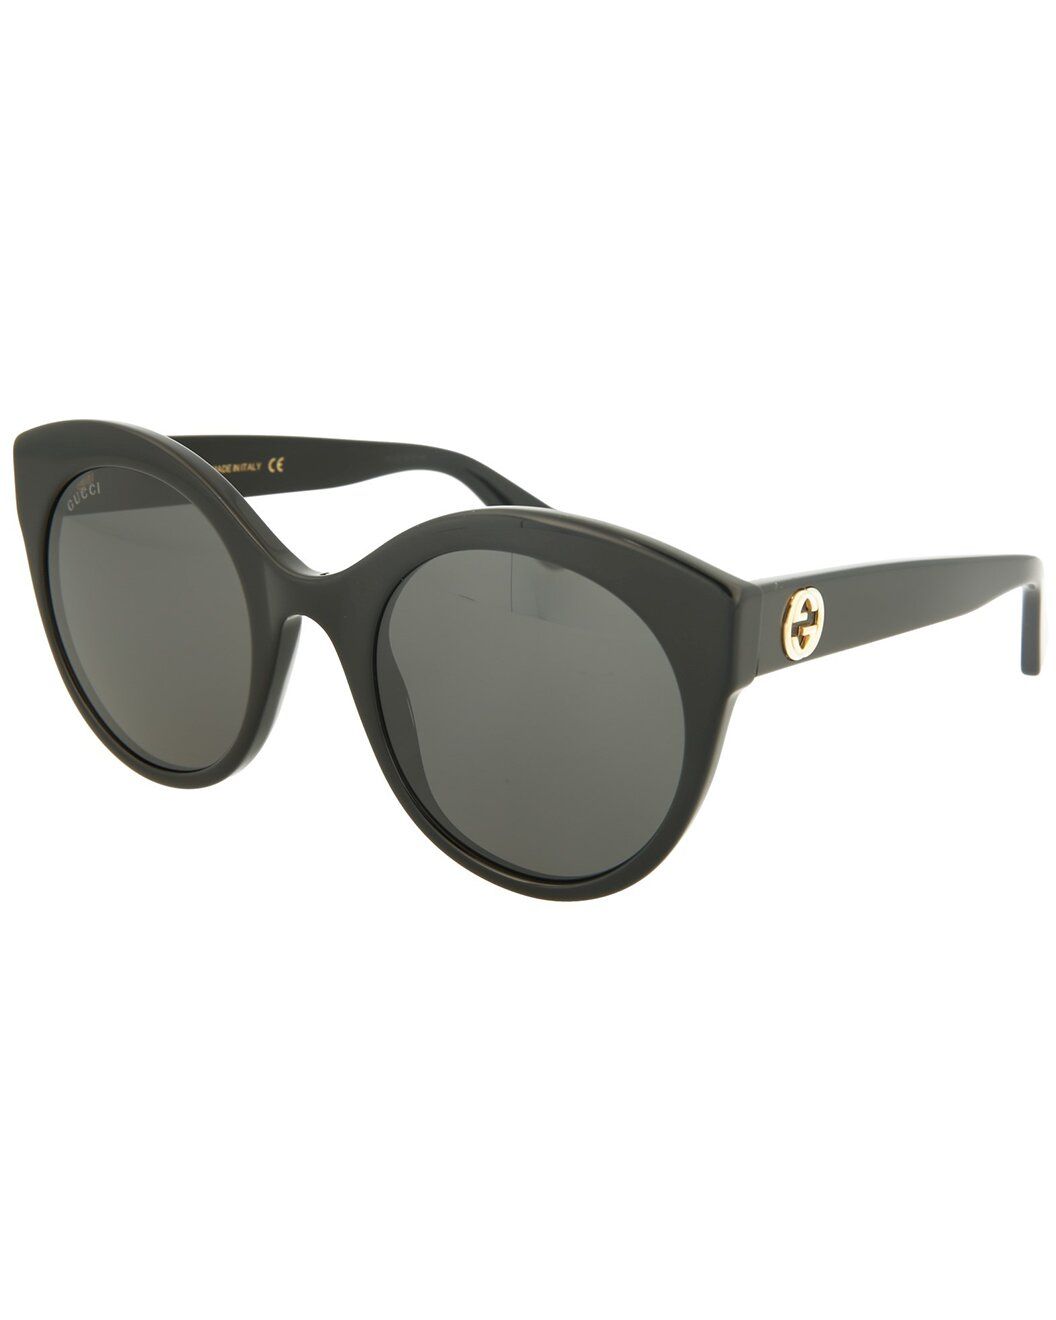 Women's GG0028S Sunglasses | Gilt & Gilt City